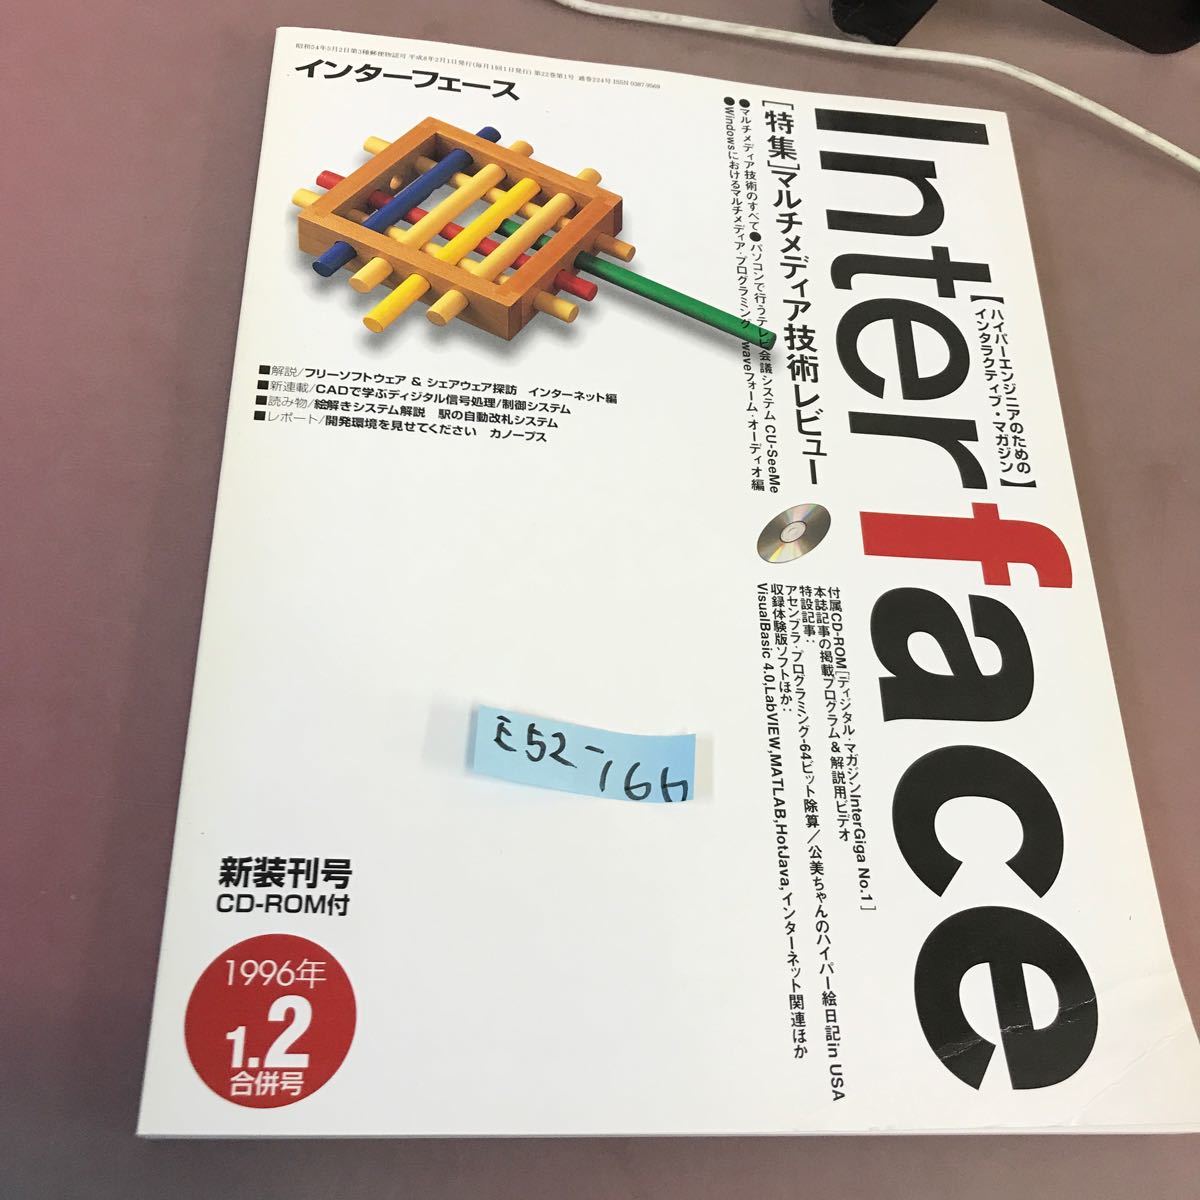 E52-166 Interface 1996.1.2合併号 特集 マルチメディア技術レビュー CQ出版社 付録付き_画像1